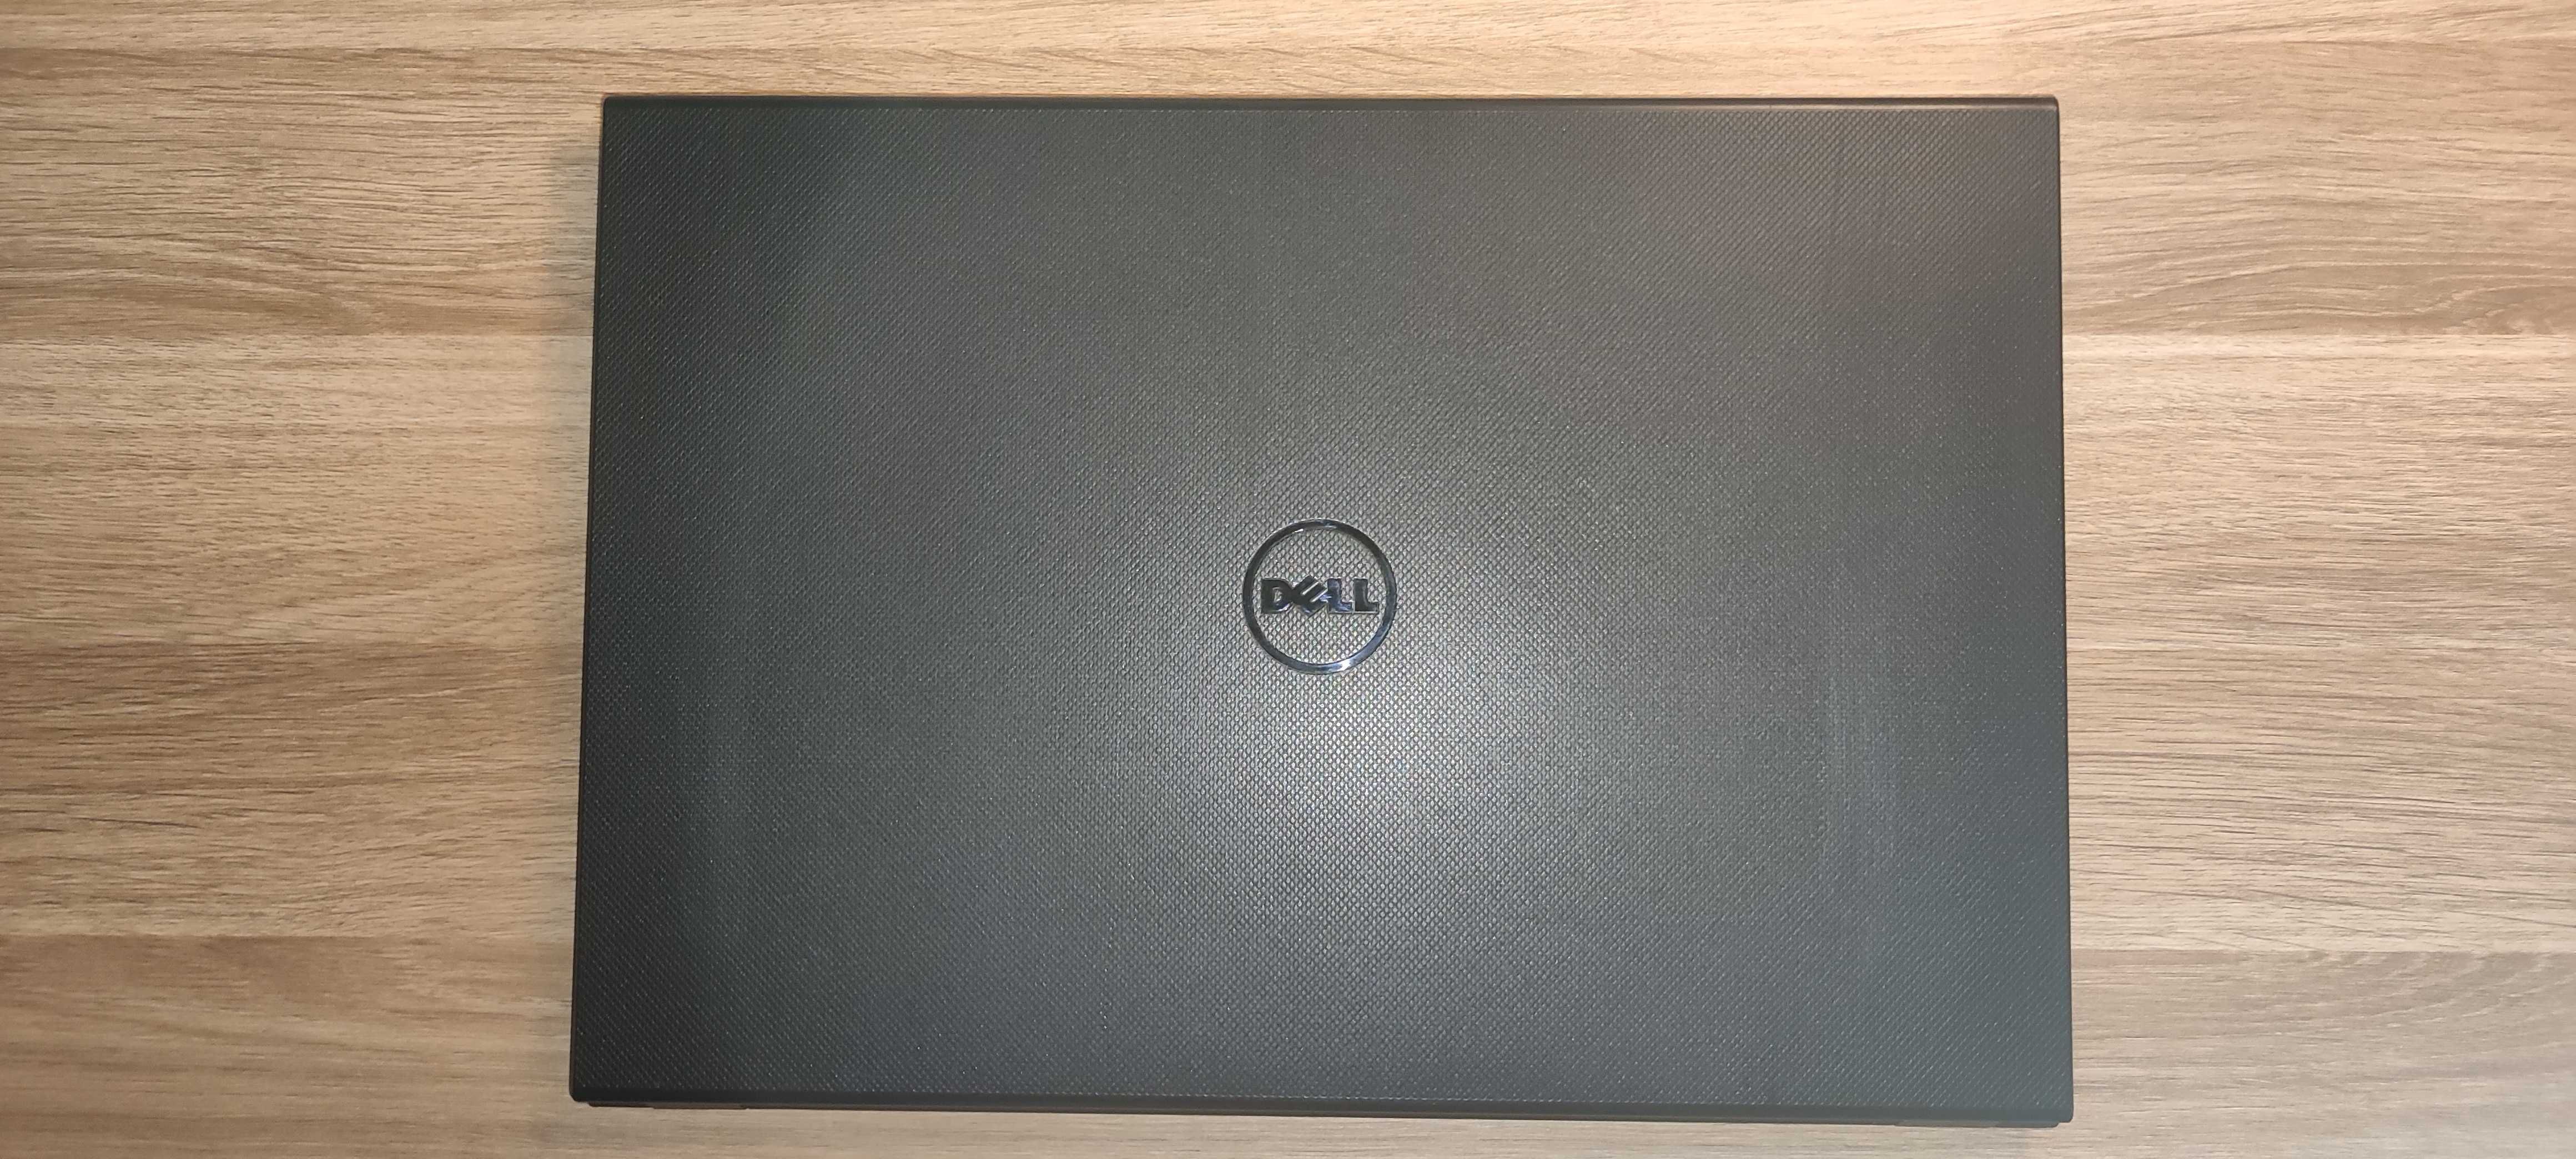 Laptop Dell Inspirion 15 3542 i3-4030U 1.90 GHz